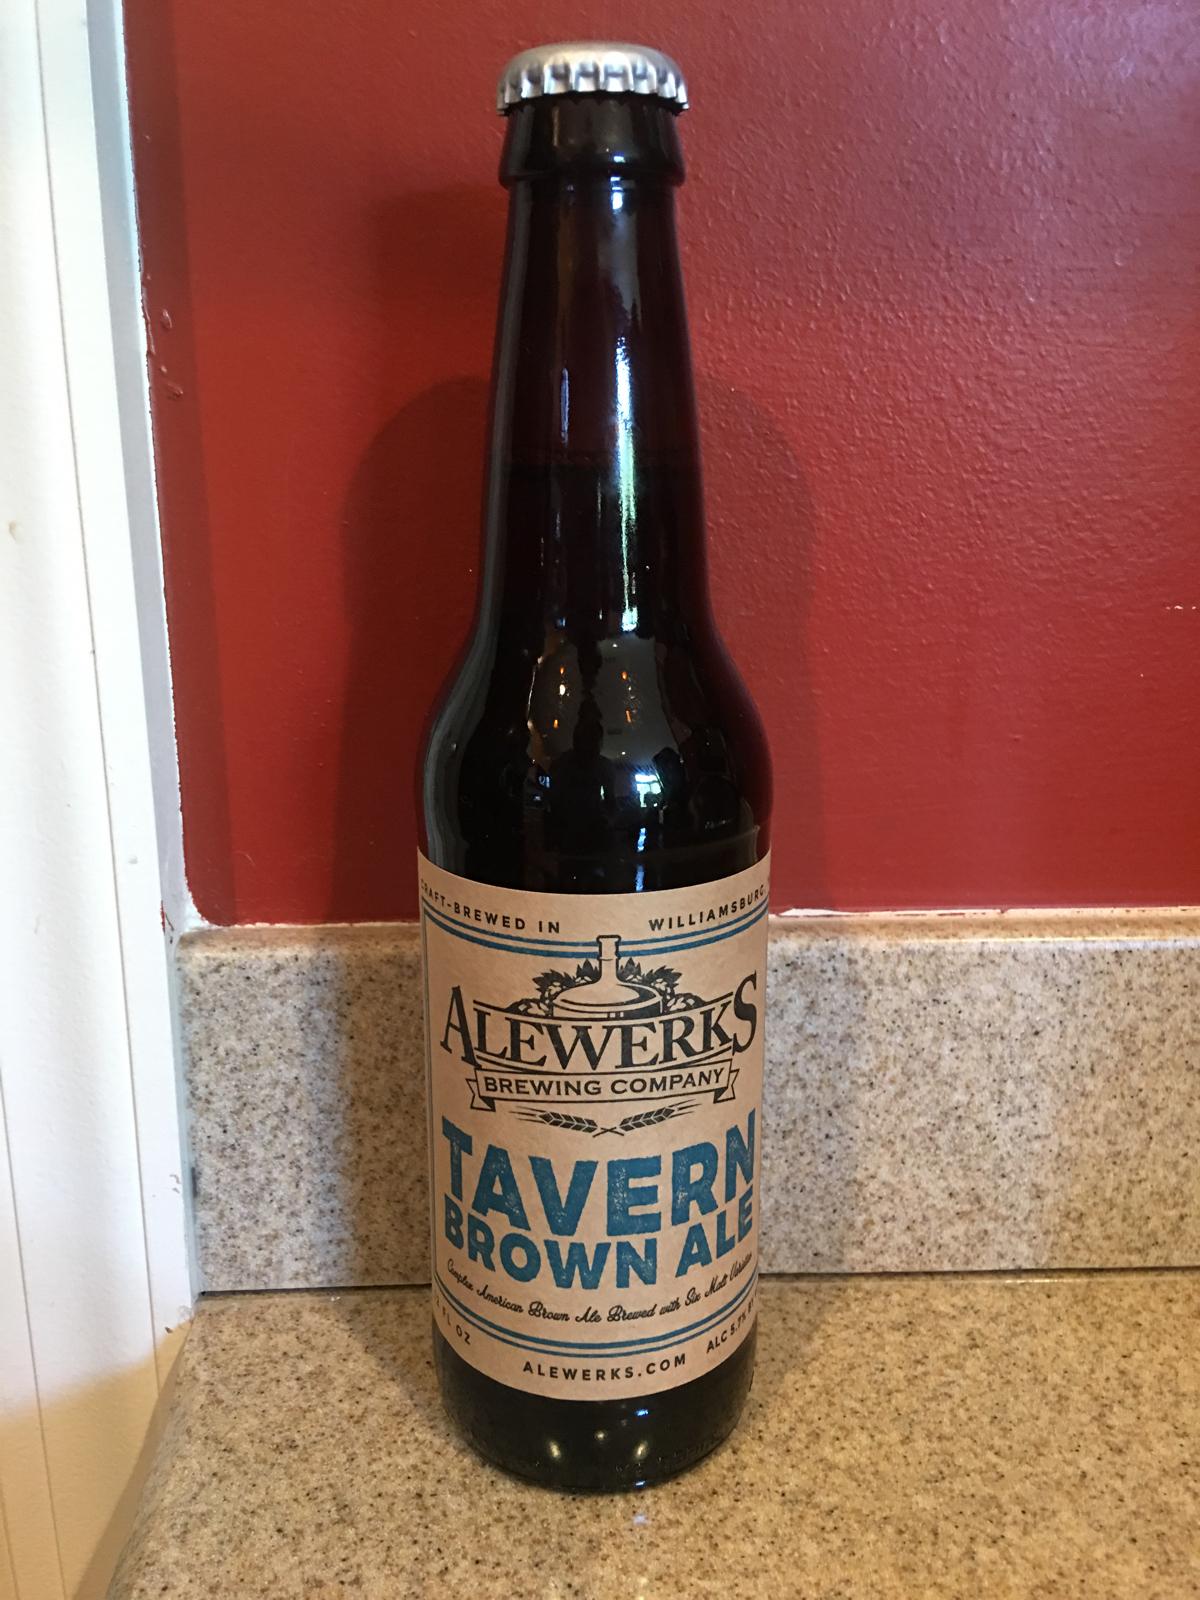 Tavern Brown Ale